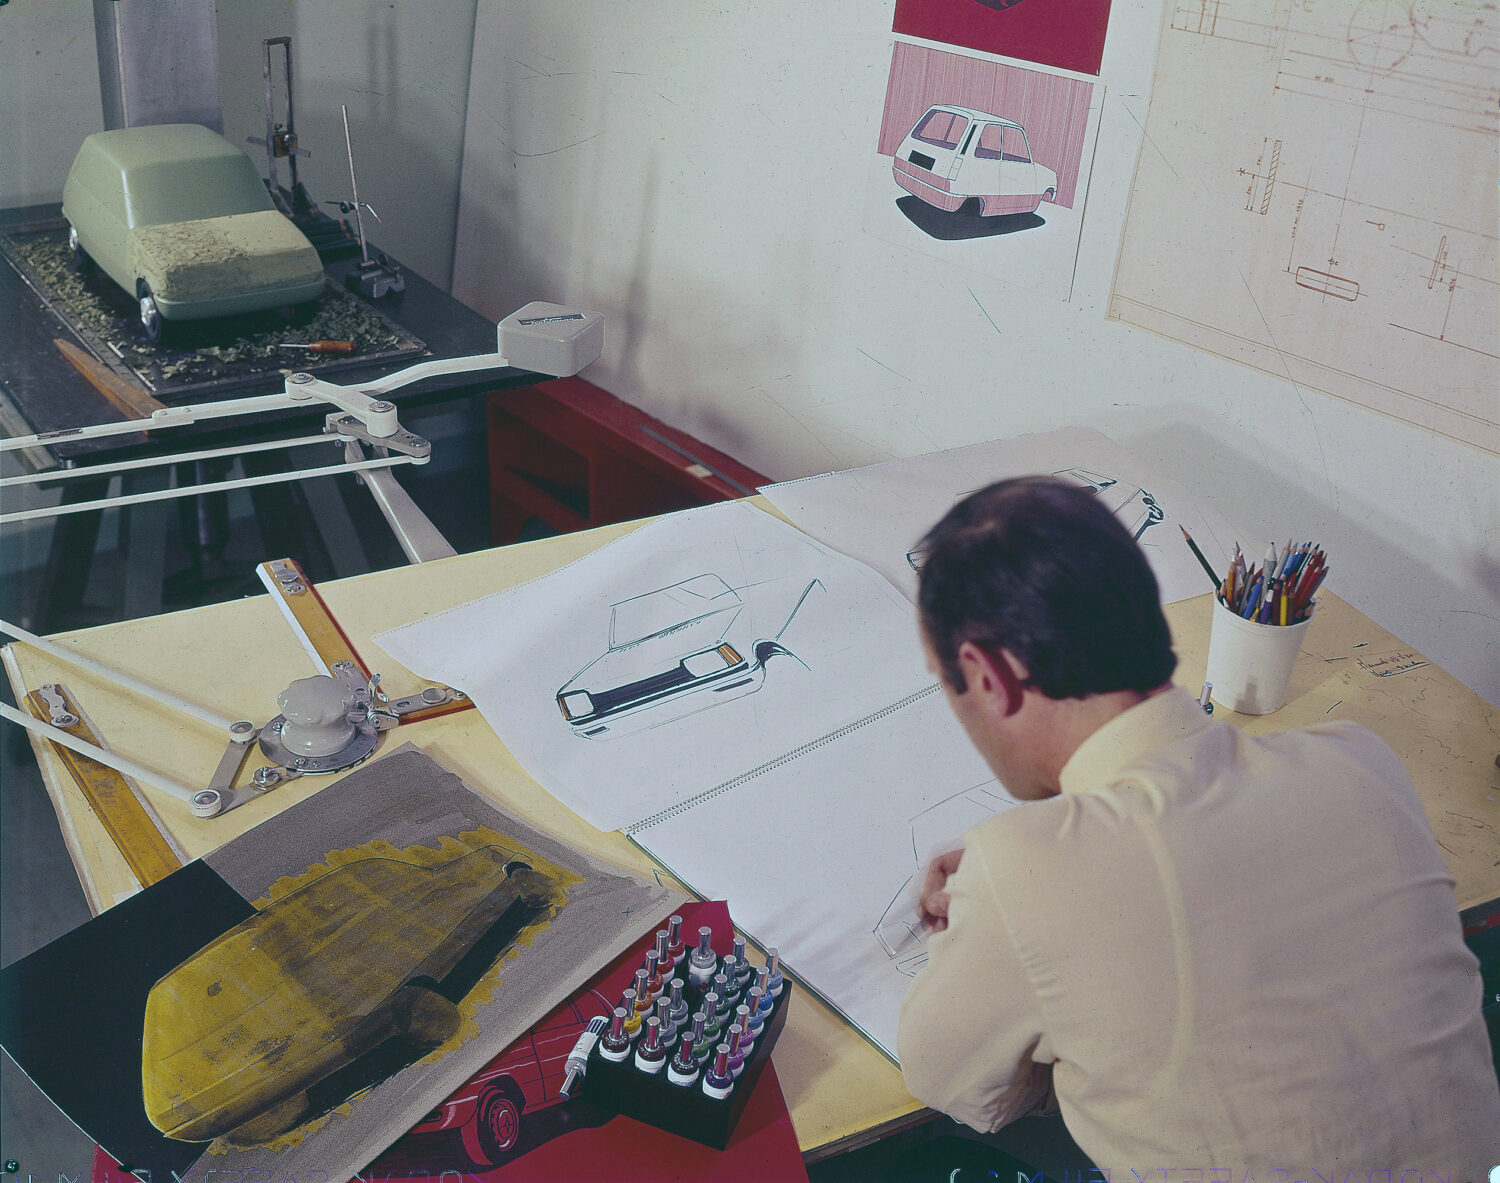 1967 - Renault 5 design study